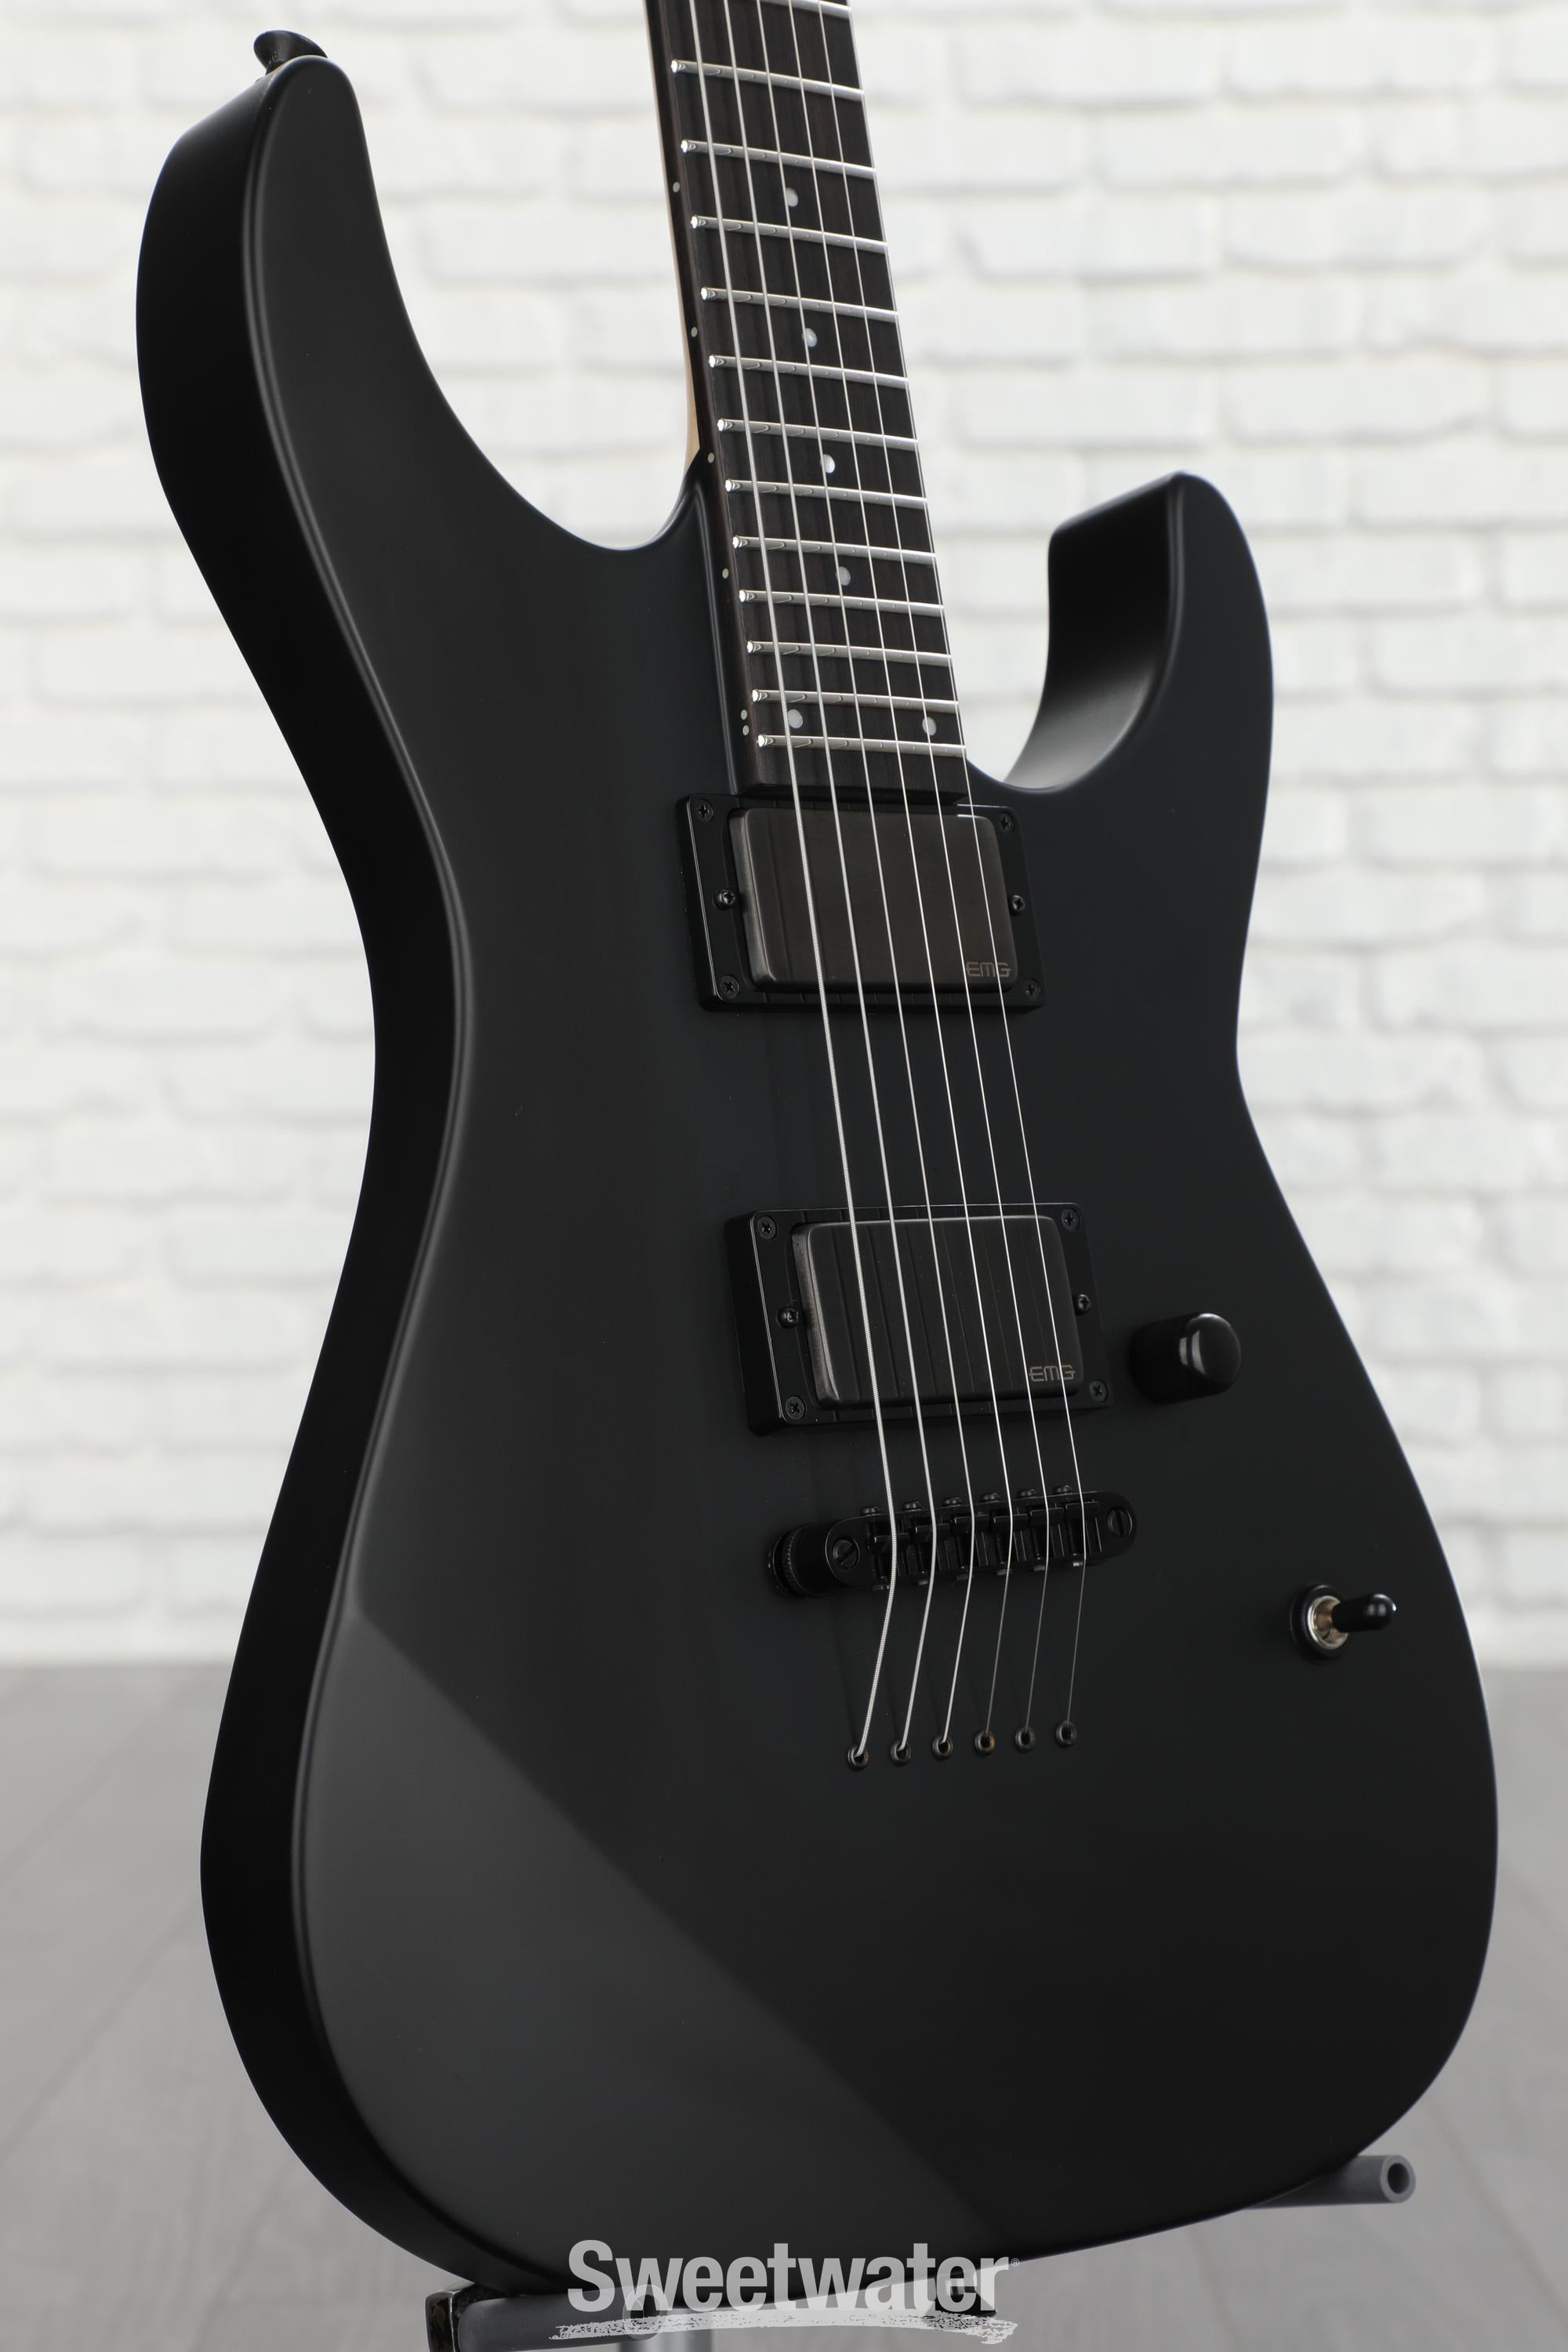 ESP E-II Jeff Ling JL-1 M-II Electric Guitar - Black Satin